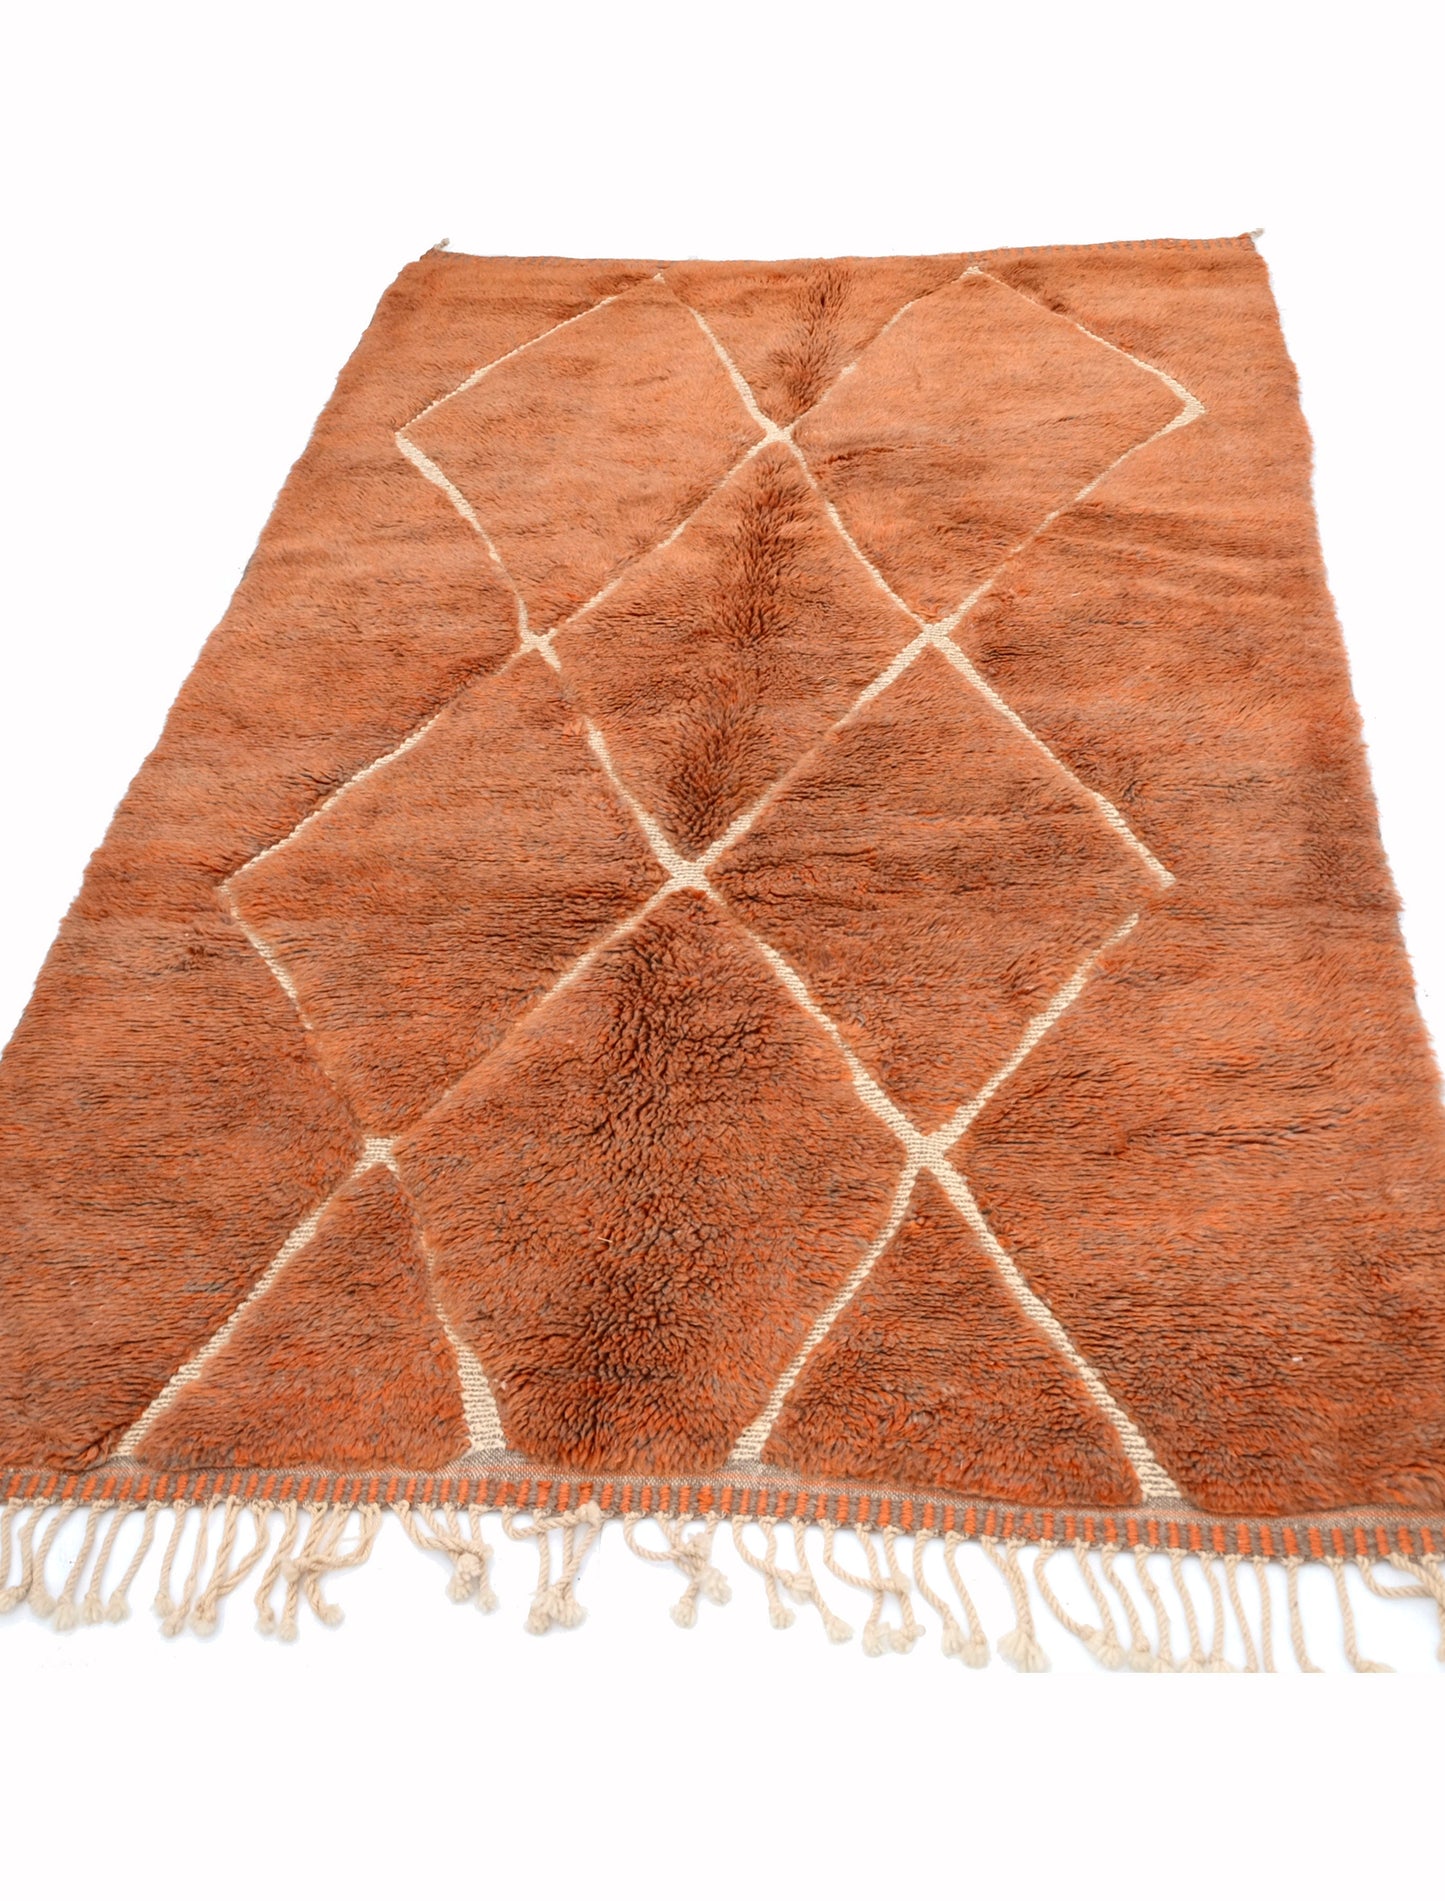 Moroccan Handmade Rug, Beni Ourain Rug 9x12, Berber Rug 8x10,Abstract Moroccan Rug, Natural Wool Rug,Handwoven Rug, Living Room Rug Modern, carpet imlil